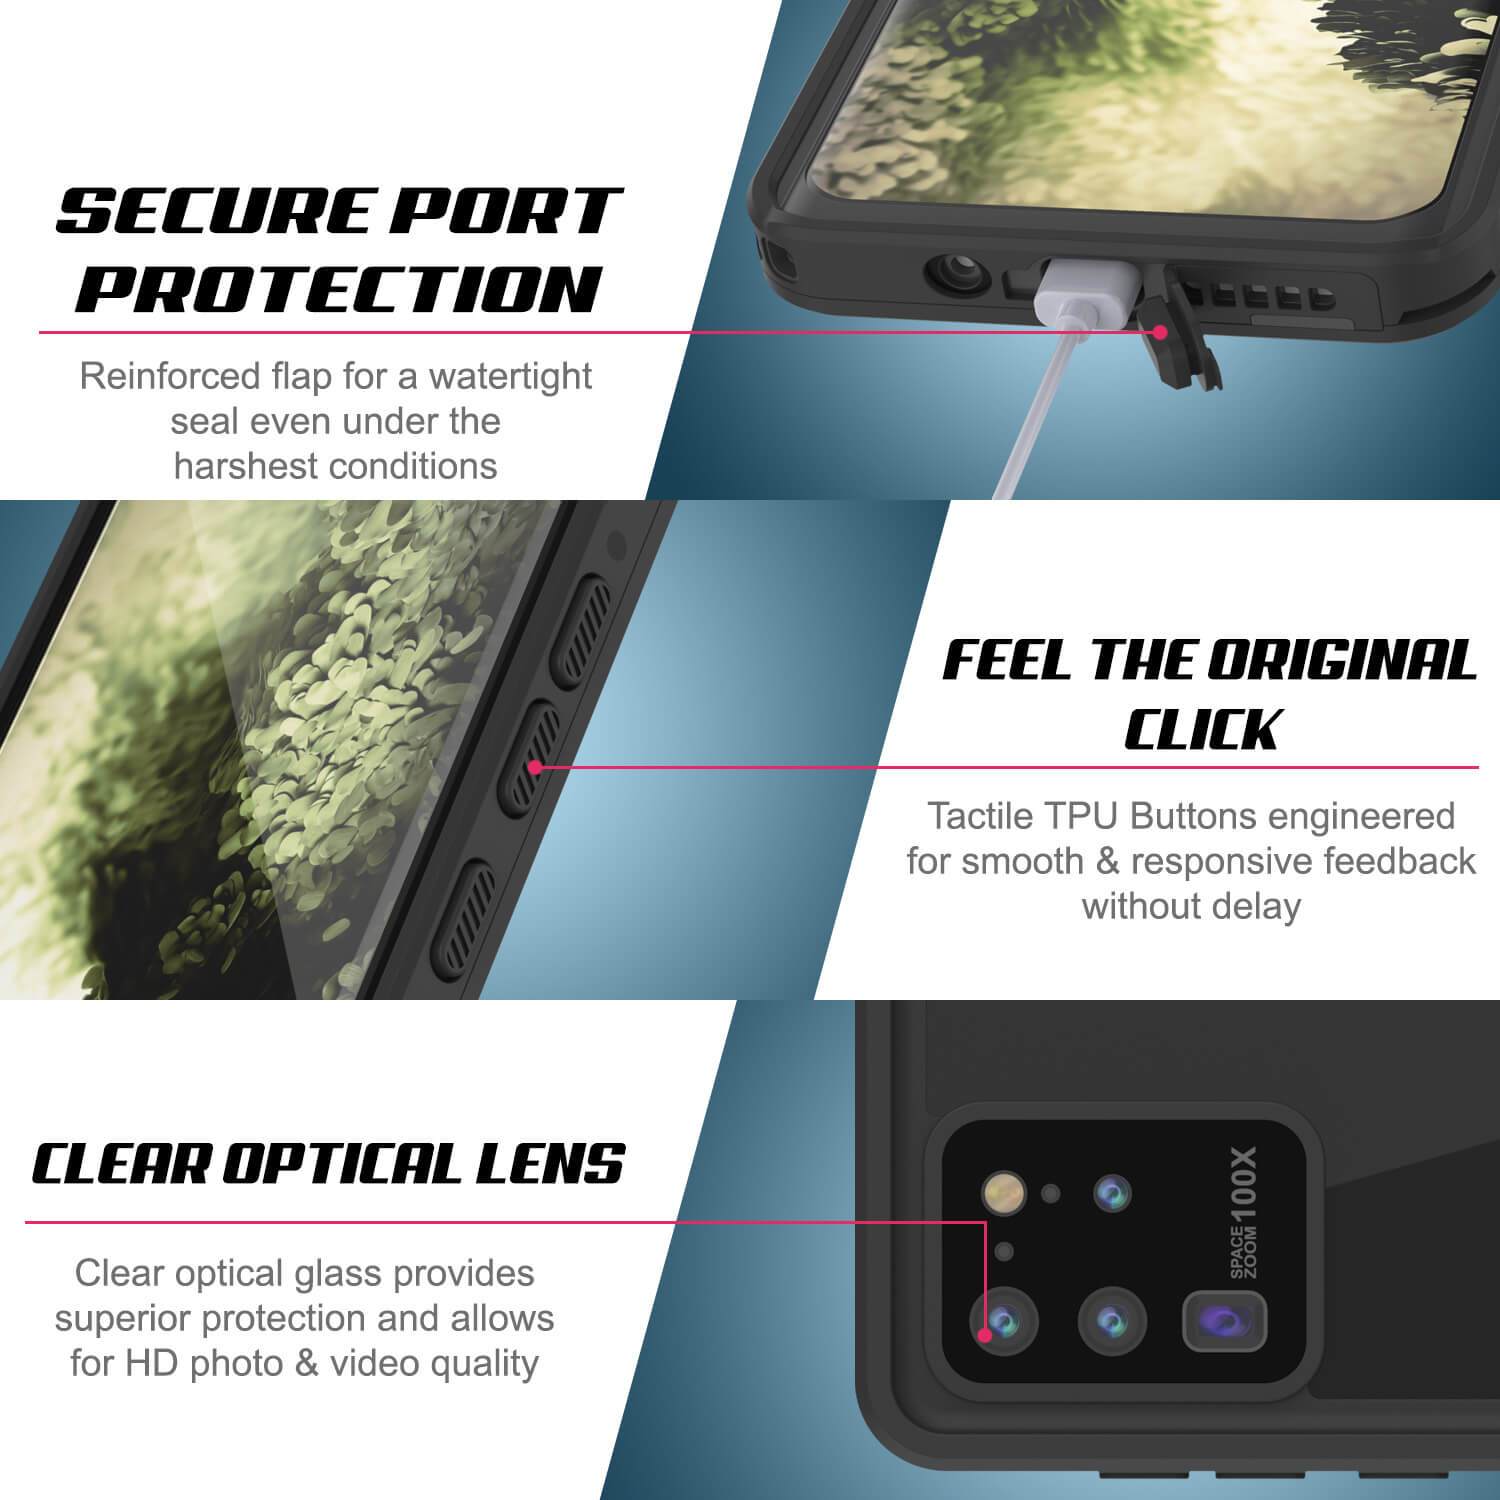 Galaxy S20 Ultra Waterproof Case PunkCase StudStar Teal Thin 6.6ft Underwater IP68 Shock/Snow Proof